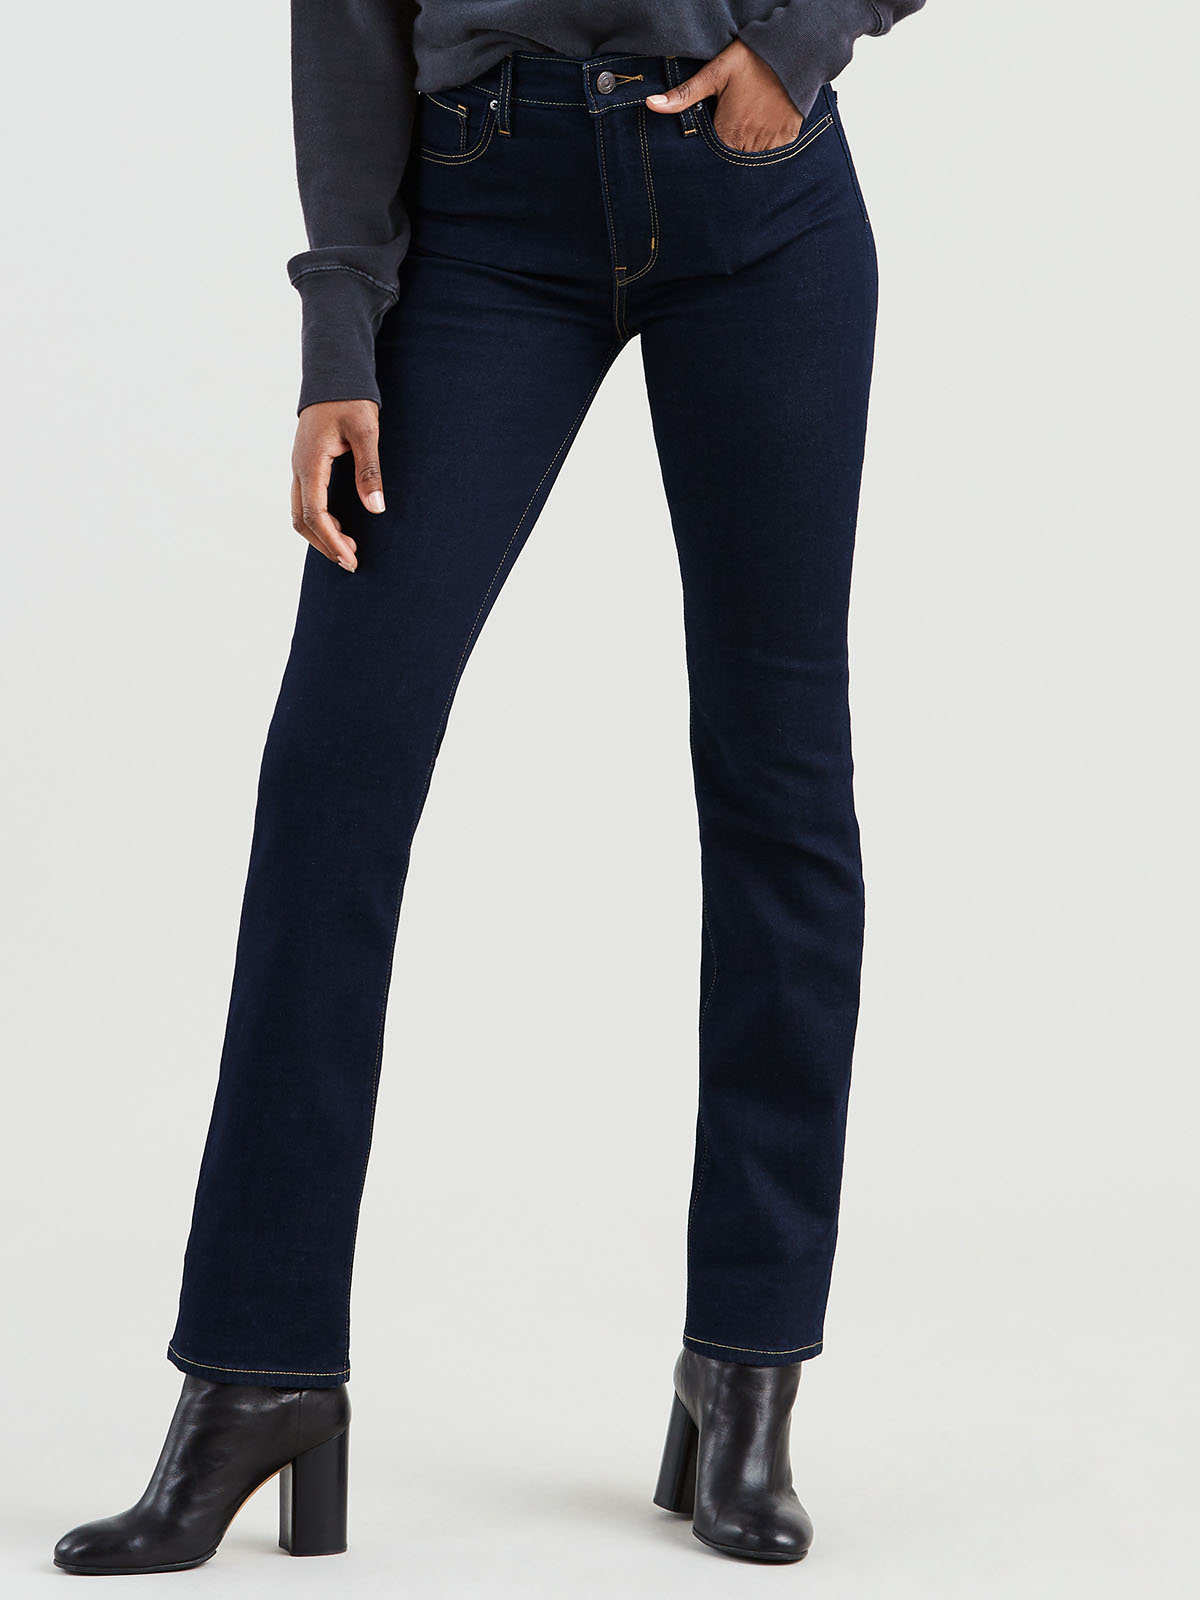 Levi's® 724™ high rise straight pantalones vaqueros de mujer 18883-0015 azul oscuro